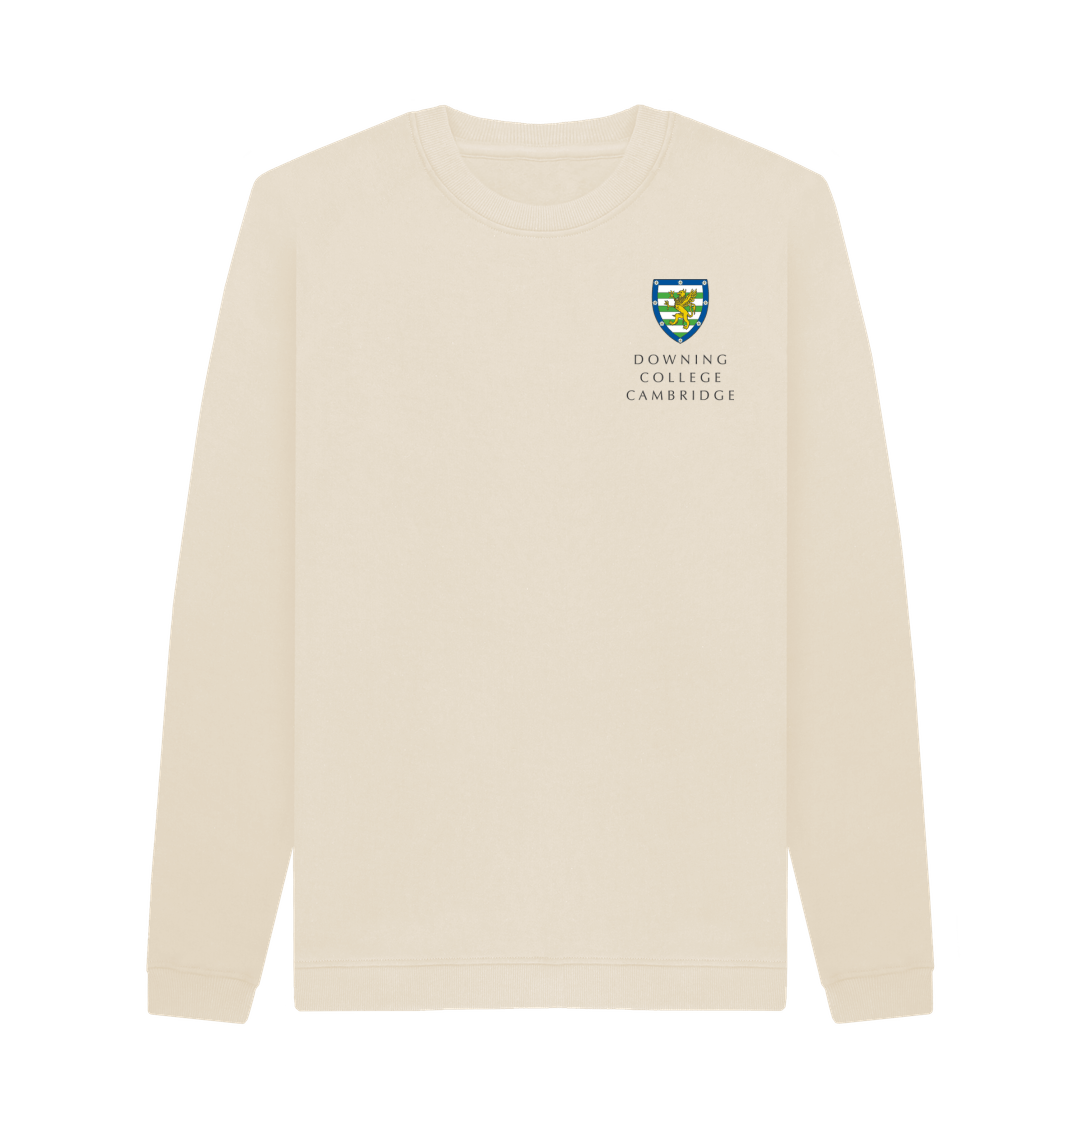 Oat Downing College classic Sweatshirt